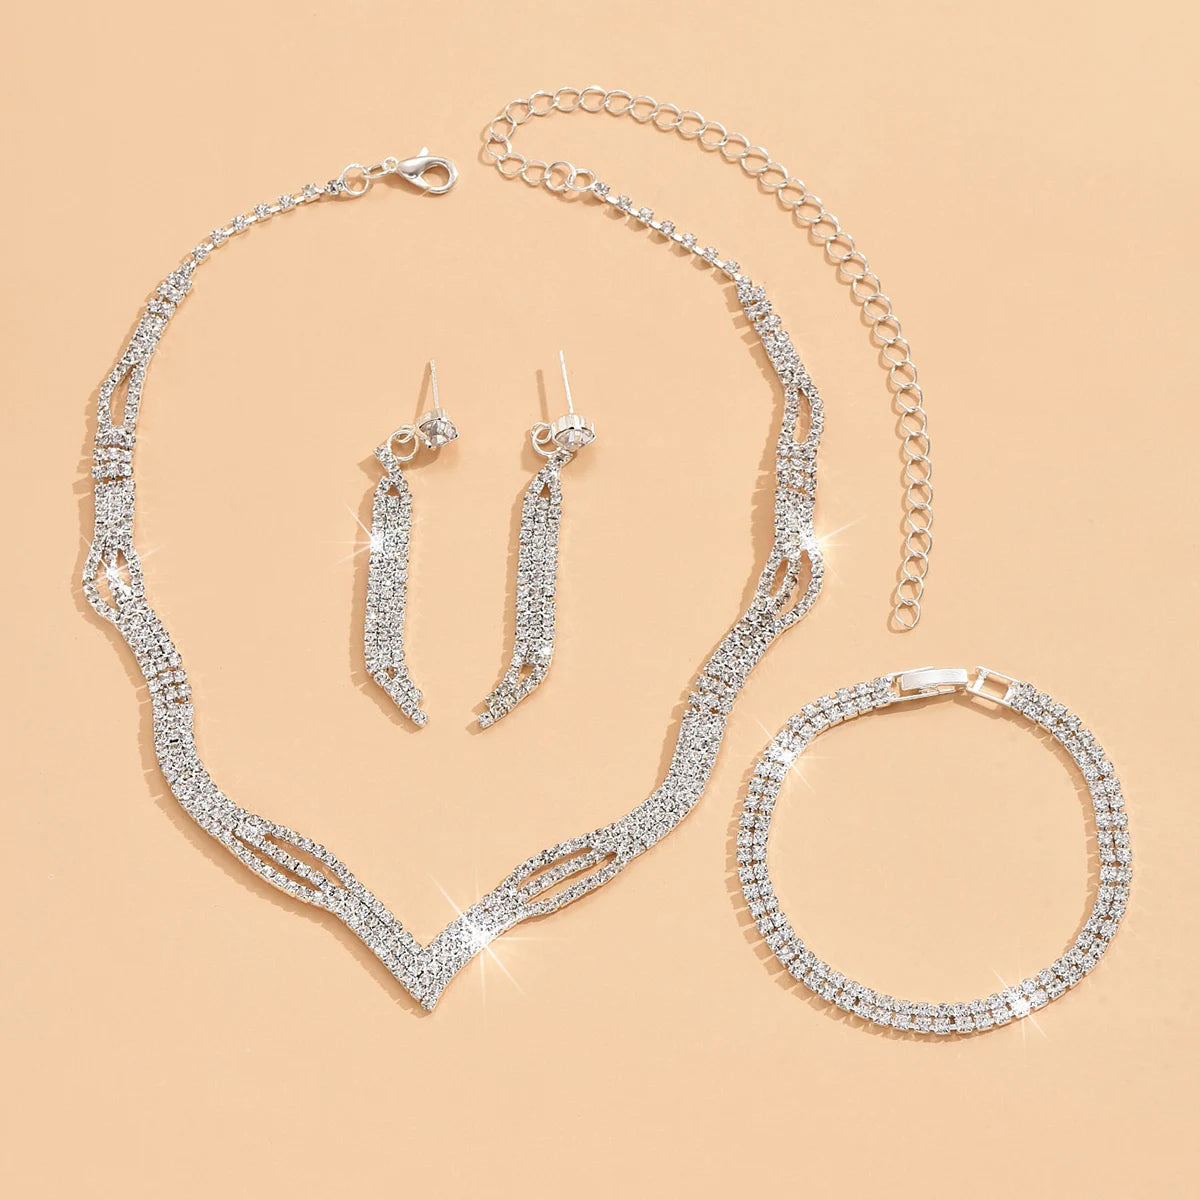 Femlion Rhinestone Jewelry Set: Necklace, Earrings, Bracelet, Bridal Wedding Accessories